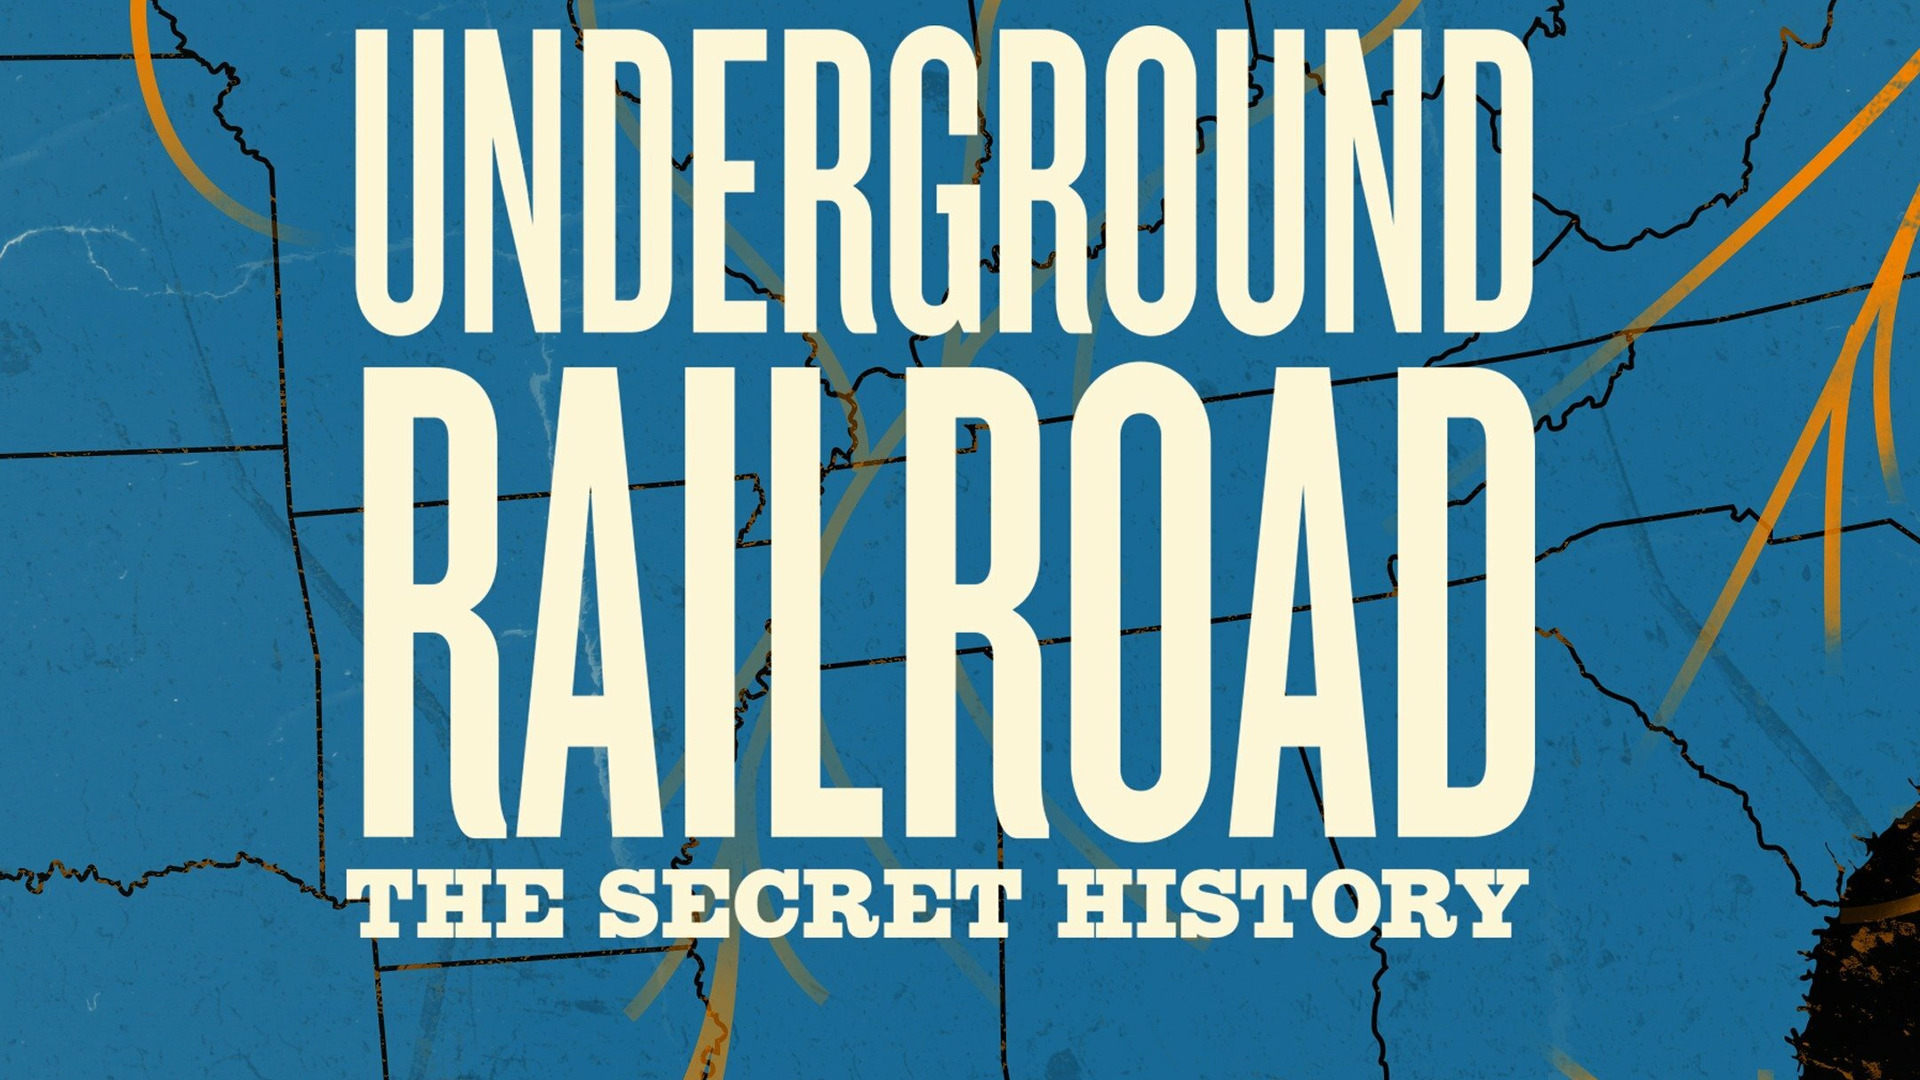 Show Underground Railroad: The Secret History